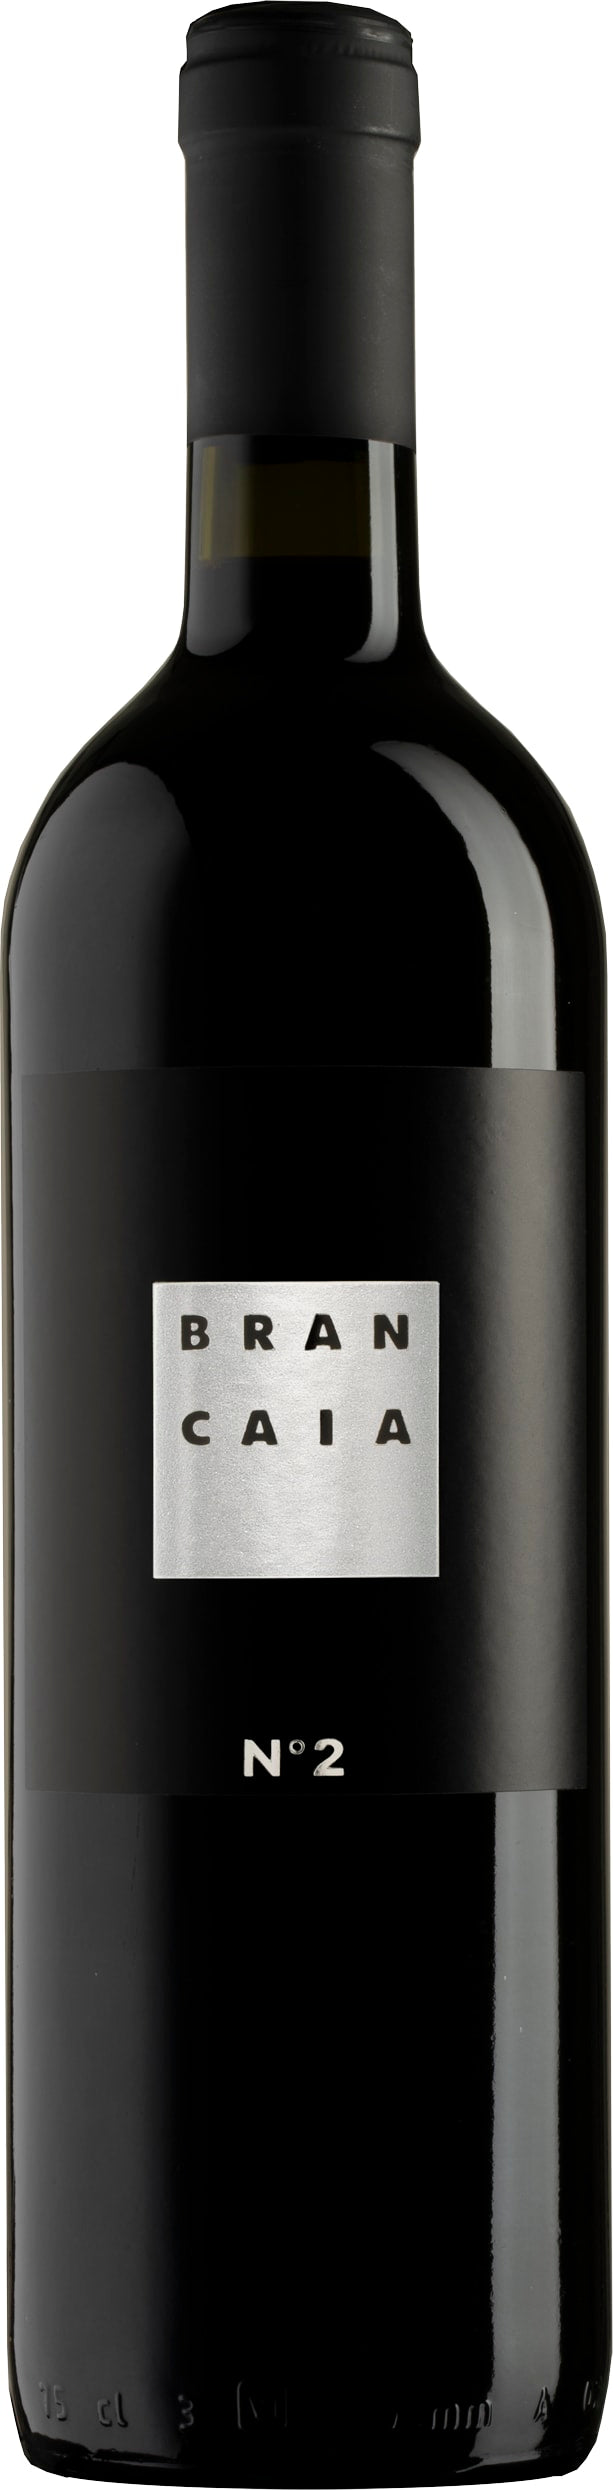 Casa Brancaia Brancaia Cabernet Sauvignon 2021 75cl - Buy Casa Brancaia Wines from GREAT WINES DIRECT wine shop